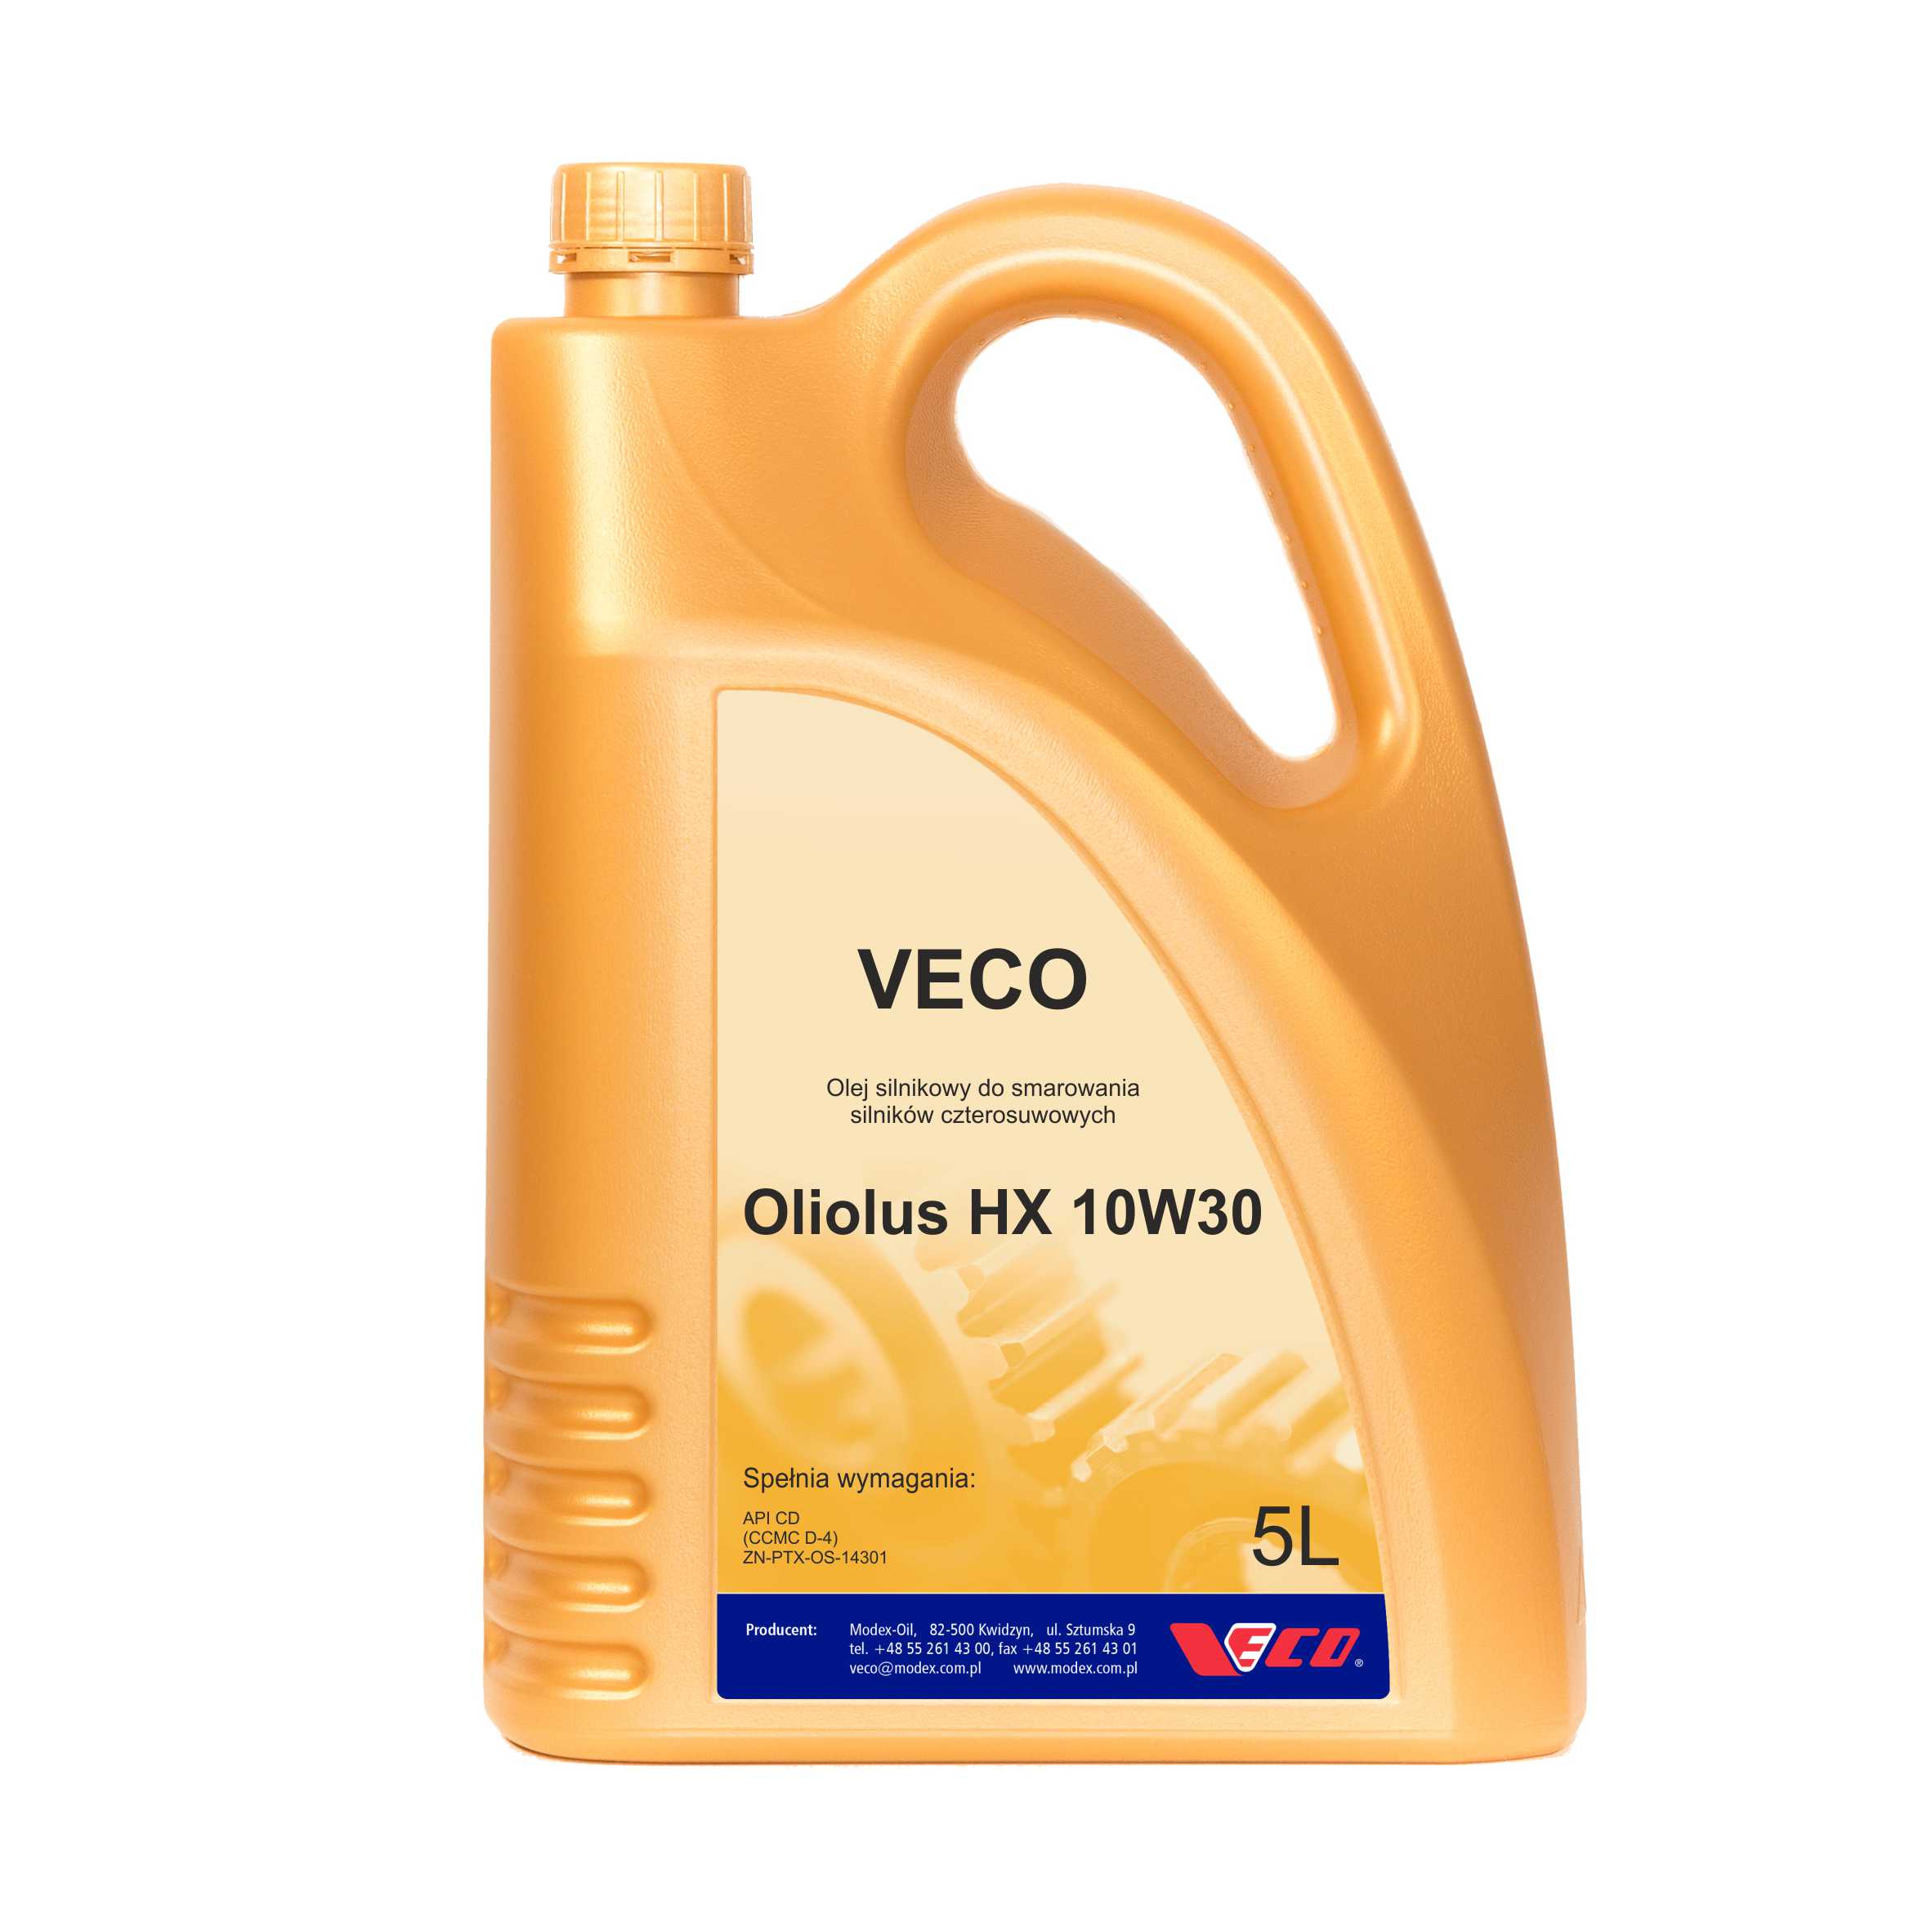 VECO Oliolus HX 10W30 opak 5L class=